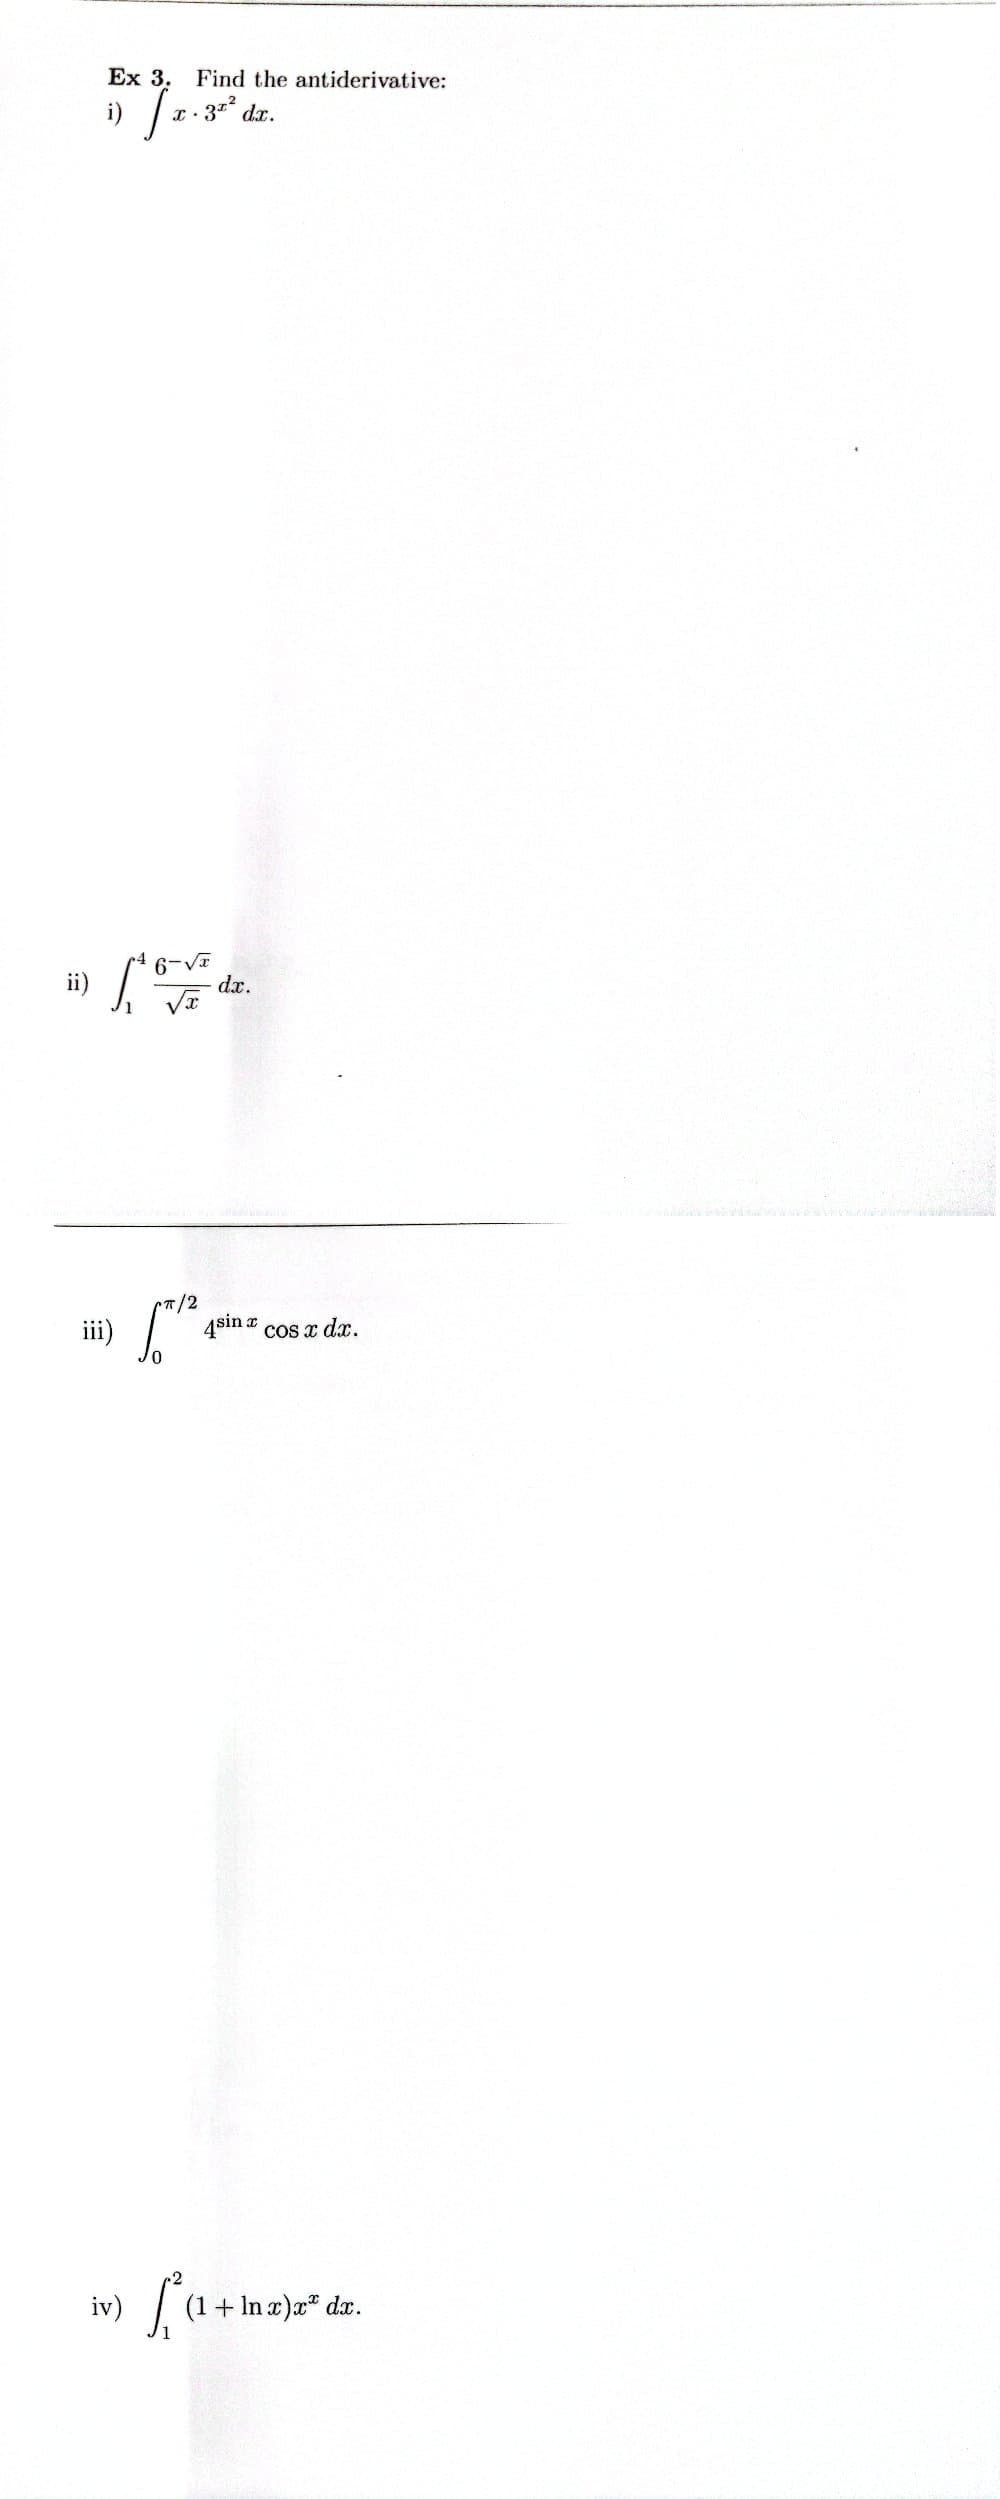 ii)
Ex 3. Find the antiderivative:
x-3x² dx.
i) /
dx.
iii)
/2
4sin x cos x dx.
iv) (1+ ln x)x dx.